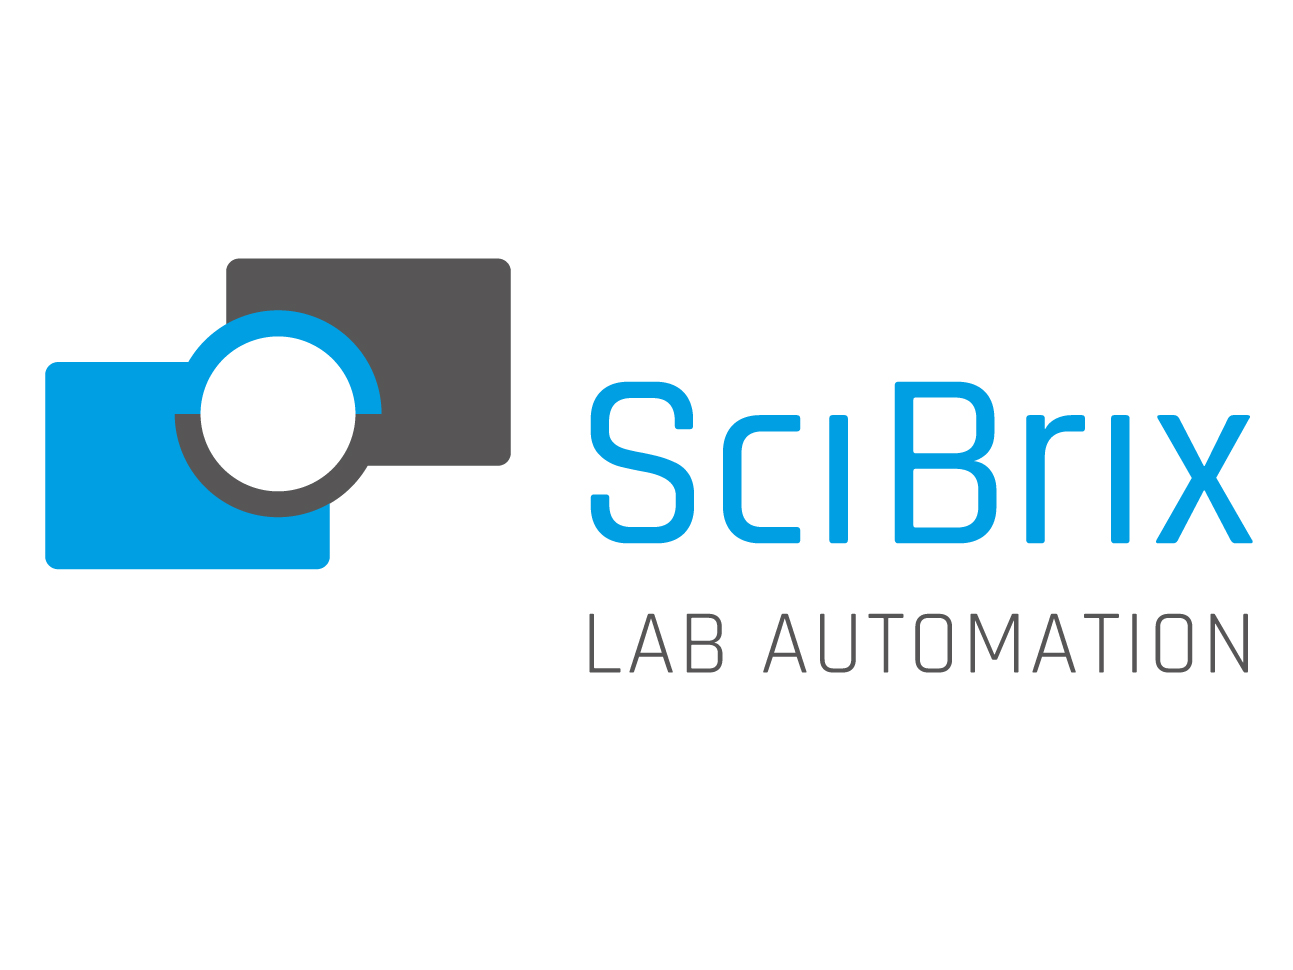 martin_zech_design_corporate_design_SciBrix-lab-automation_logo